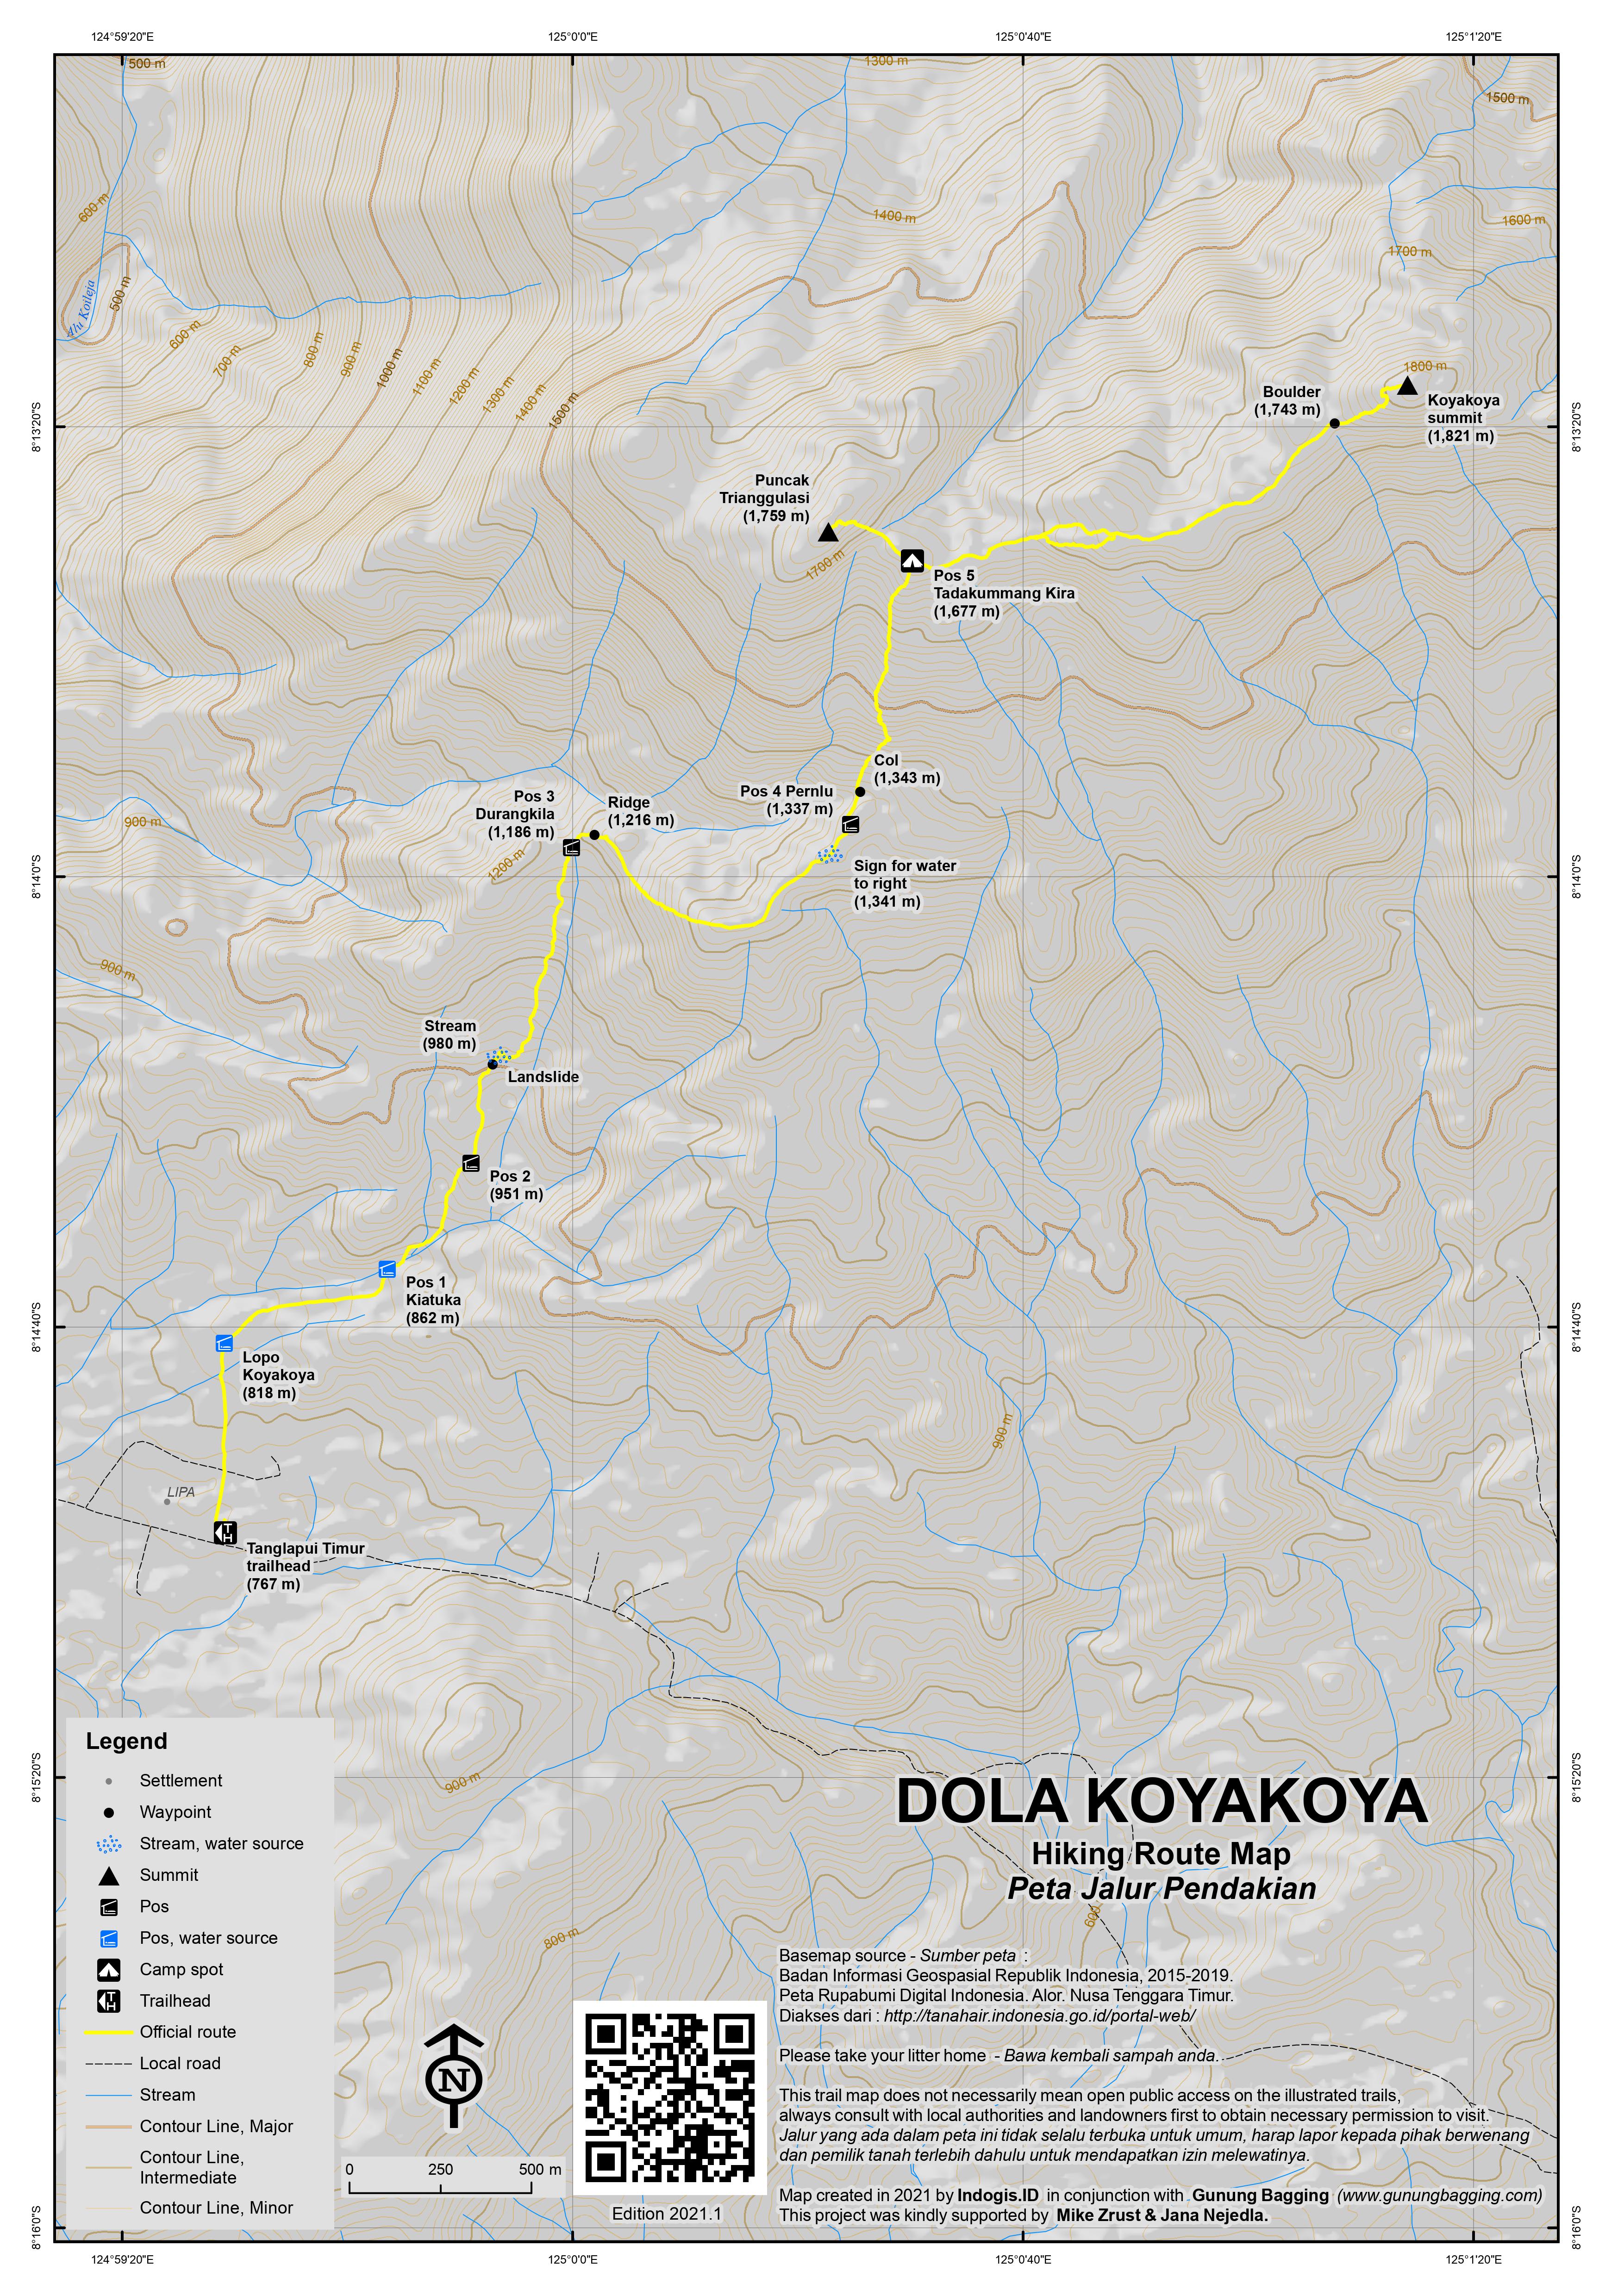 Peta Jalur Pendakian Dola Koyakoya